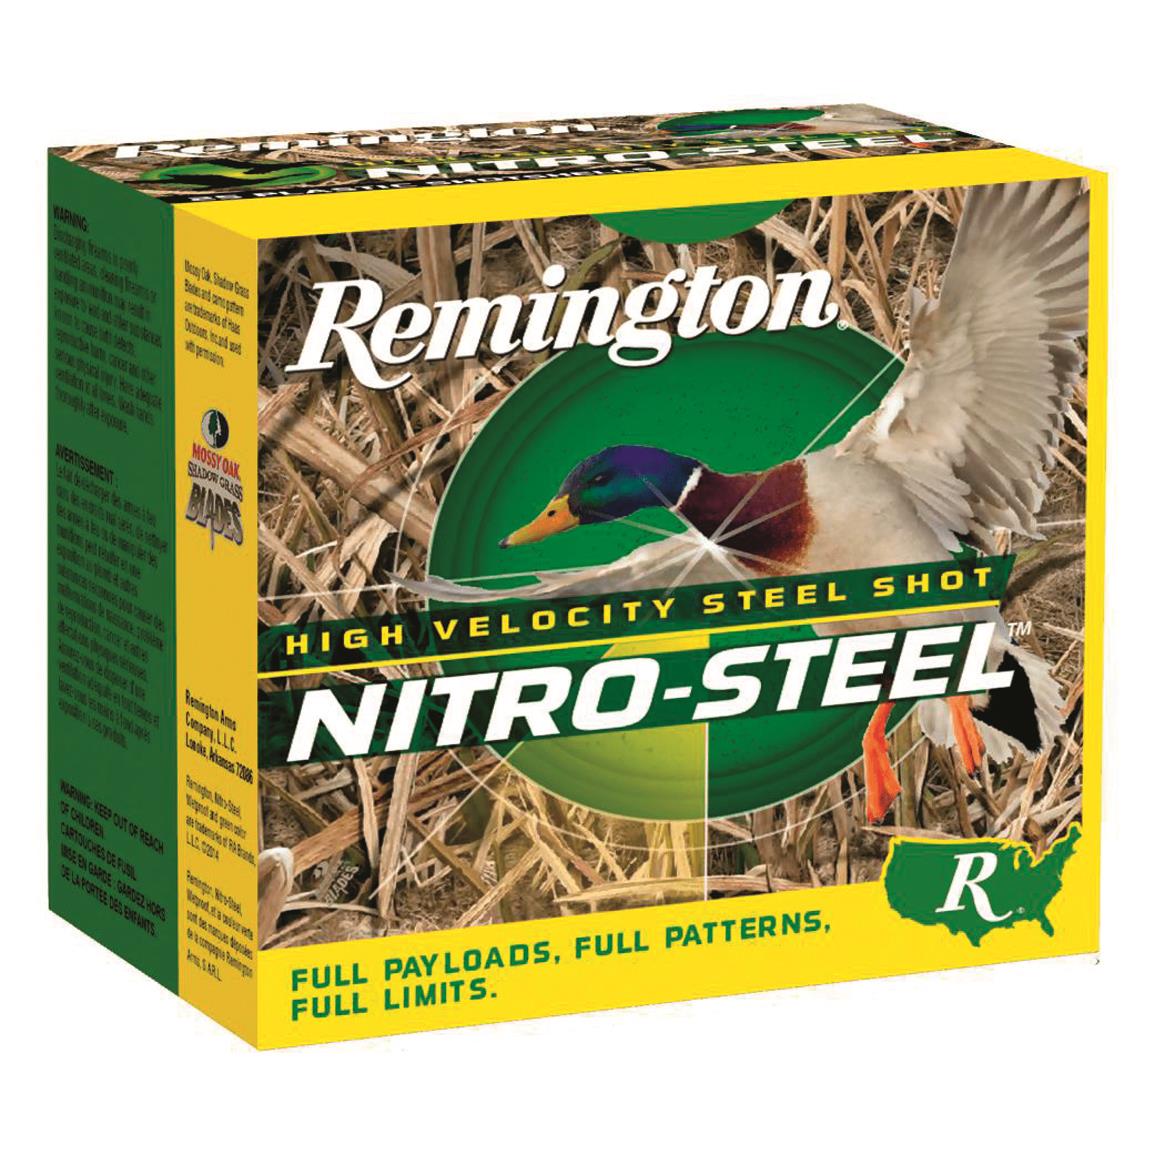 Remington Nitro-Steel High-Velocity, 12 Gauge, 3", 1 3/8 oz., 250 Rounds